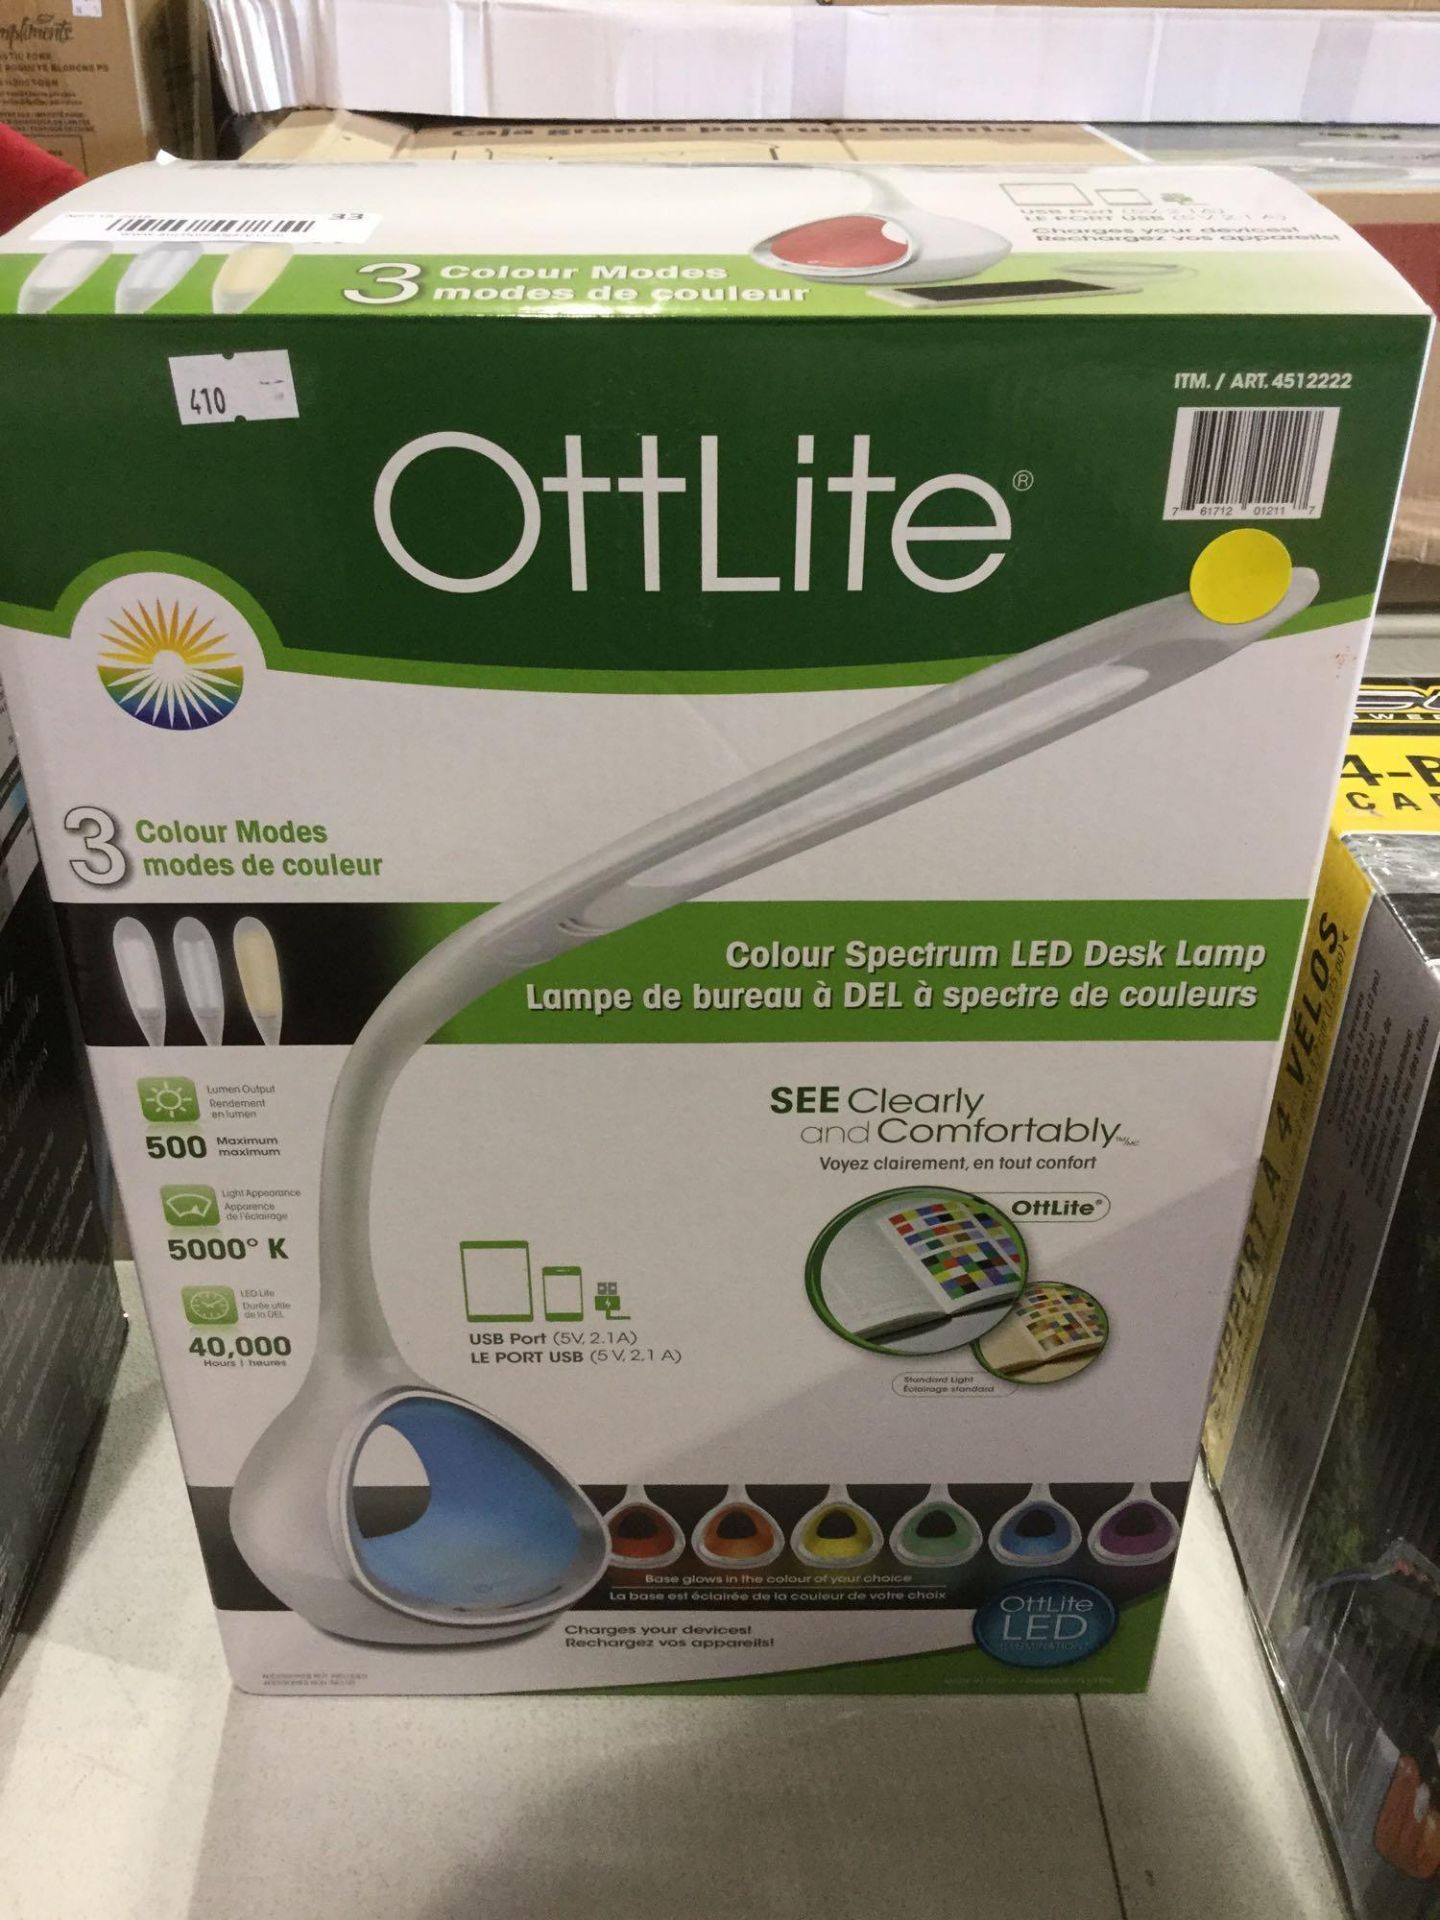 OttLite Desk lamp in the box